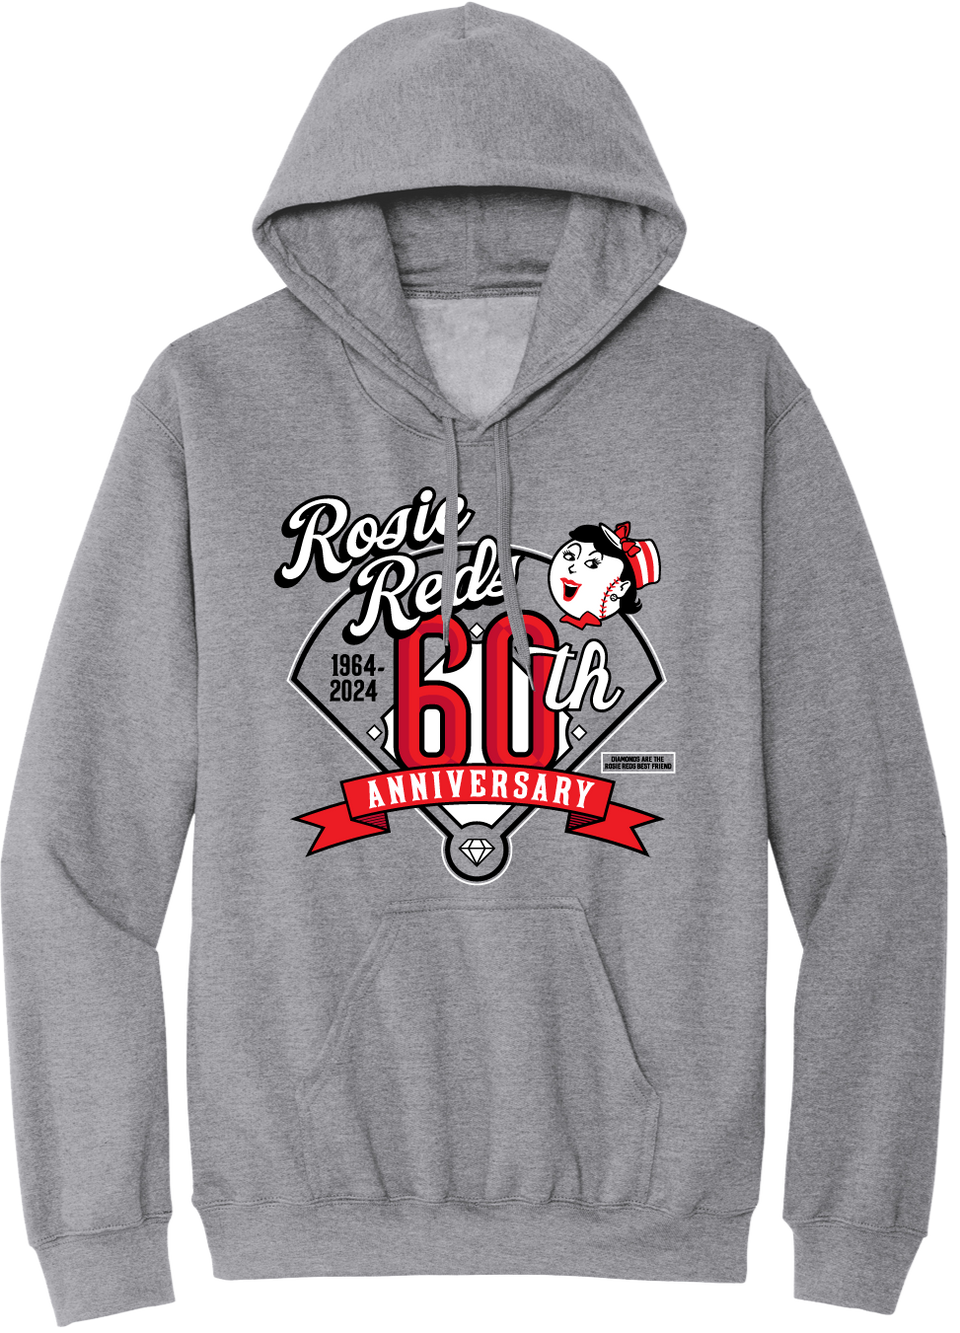 Rosie Reds 60th Anniversary Hoodie